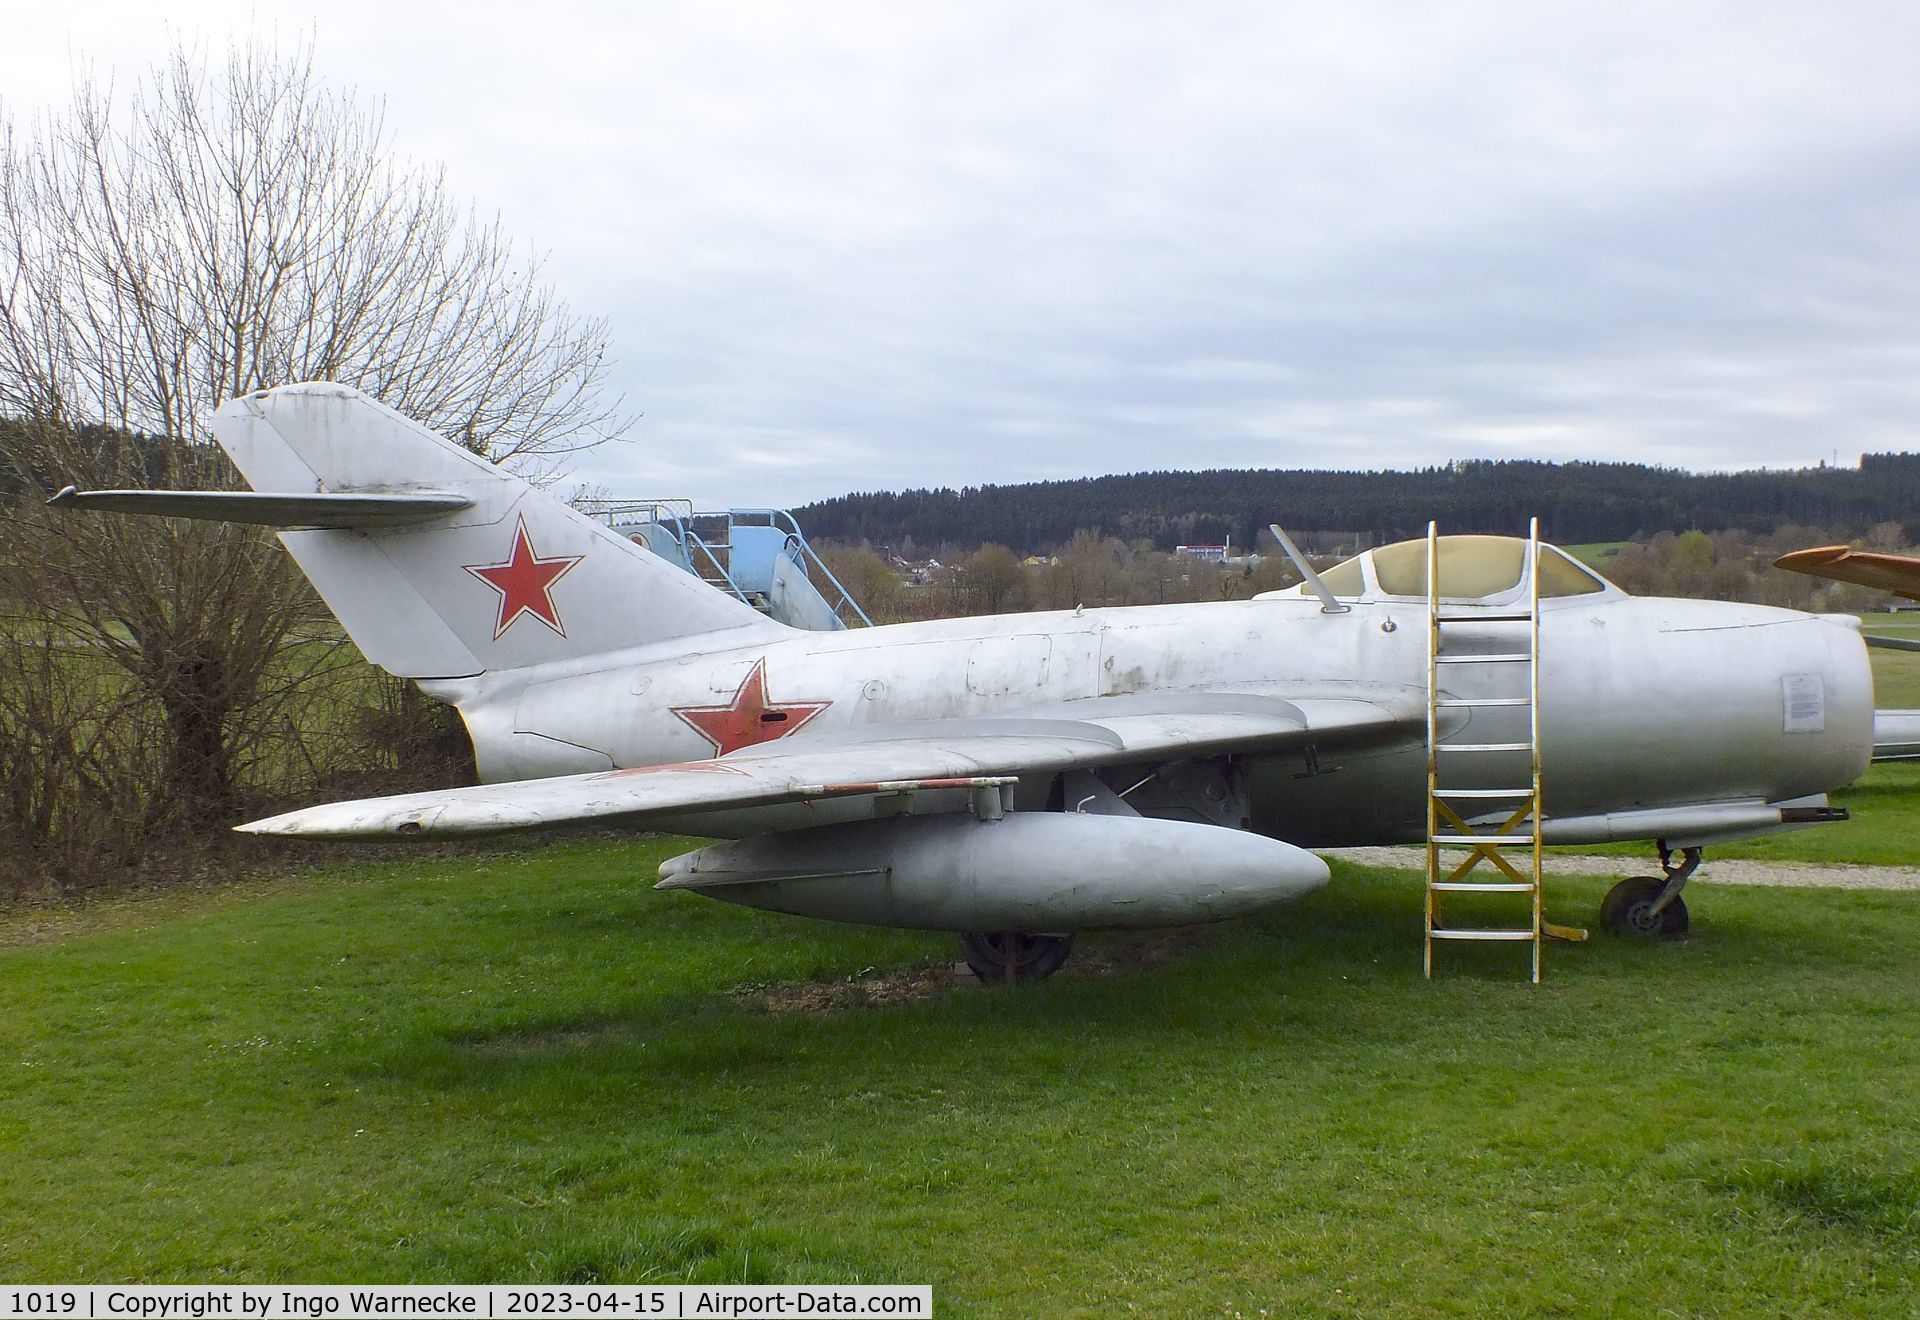 1019, PZL-Mielec Lim-2 (MiG-15bis) C/N 1B-01019, PZL-Mielec Lim-2 (Mig-15bis) FAGOT at the Internationales Luftfahrtmuseum, Schwenningen